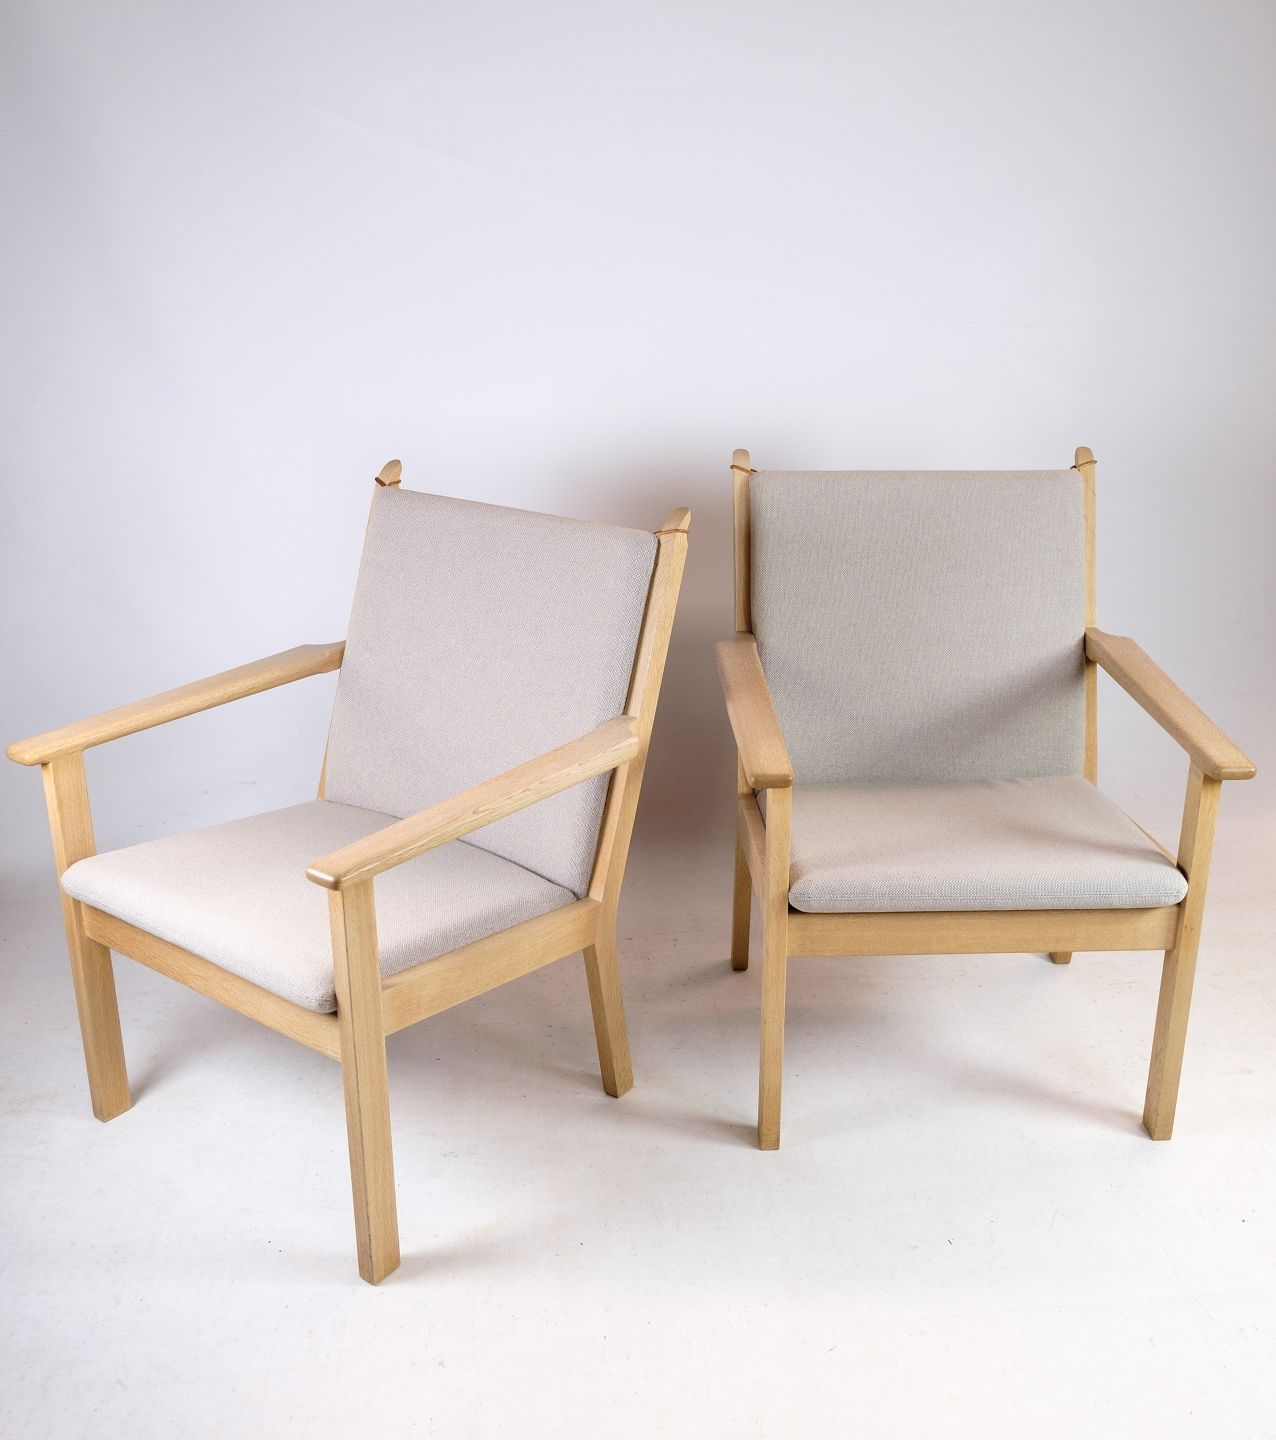 KAD ringen - 2 armchairs, model GE284, Hans J. Wegner manufactured